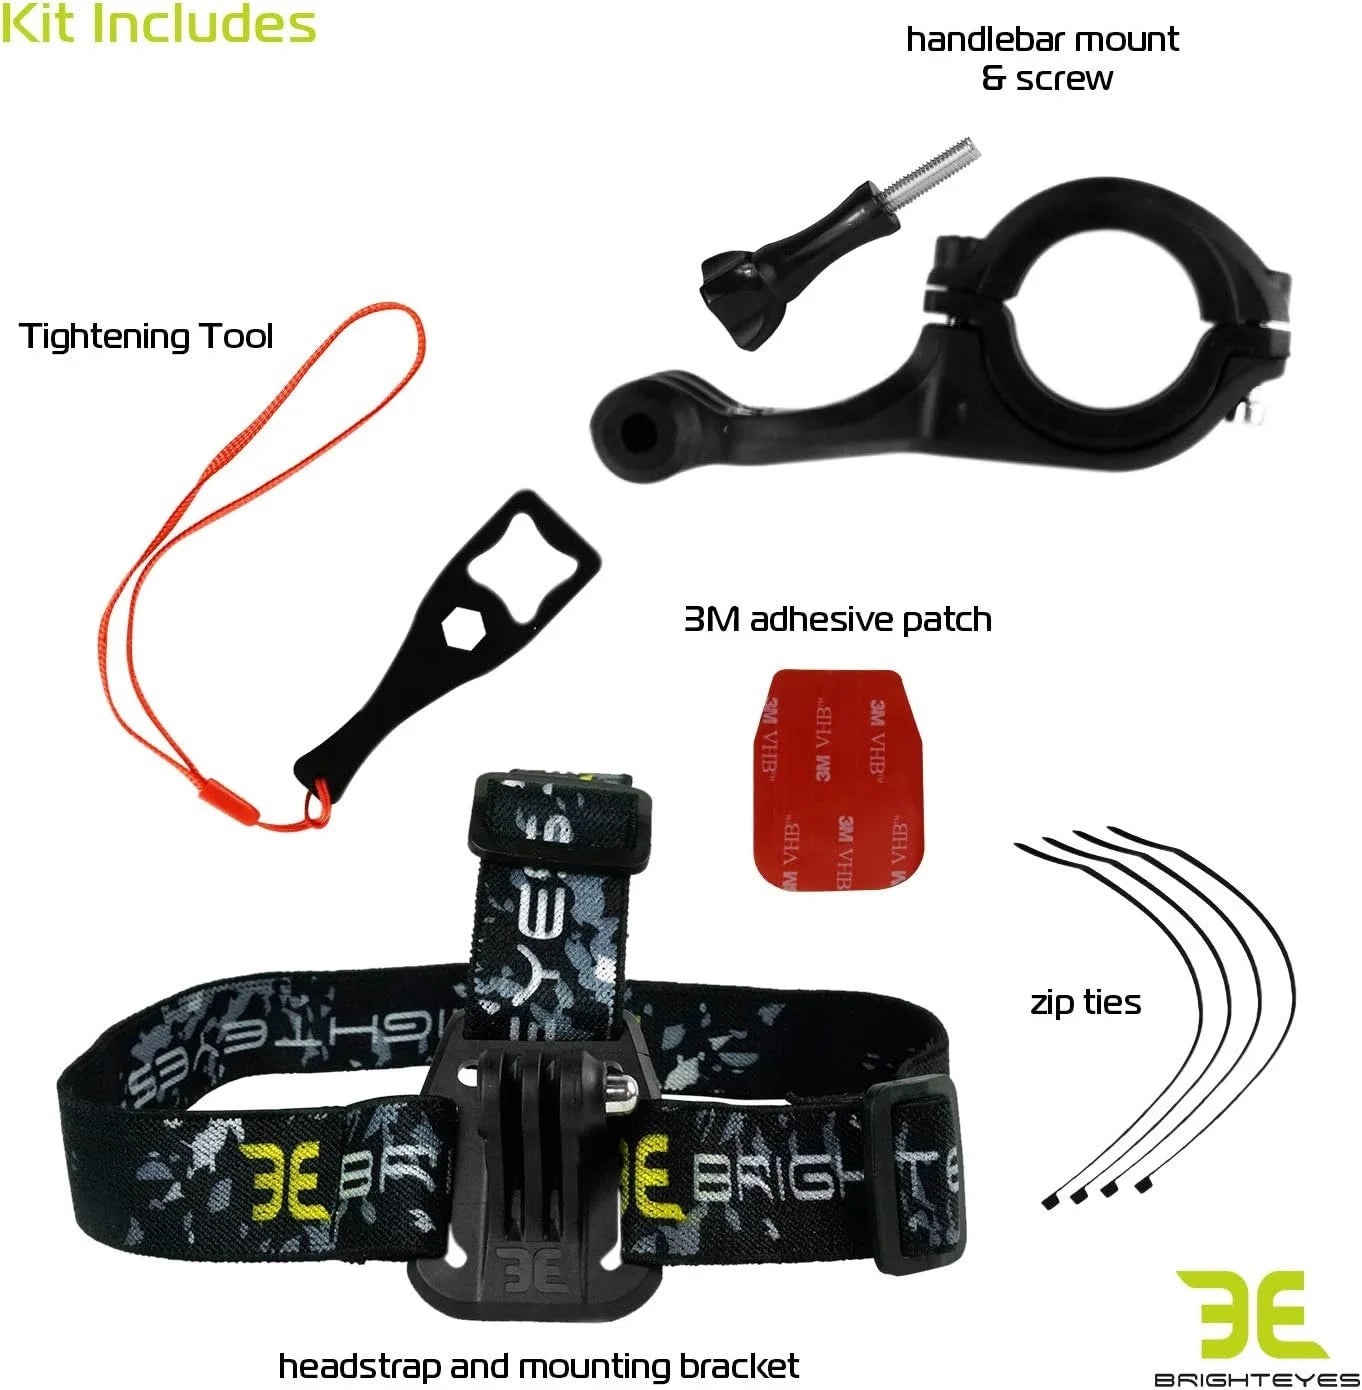 GoPro Style Mount Adapter Kit For 1800 Stamina, 1600 Helios & 1200 Blaze Bike Light Sets